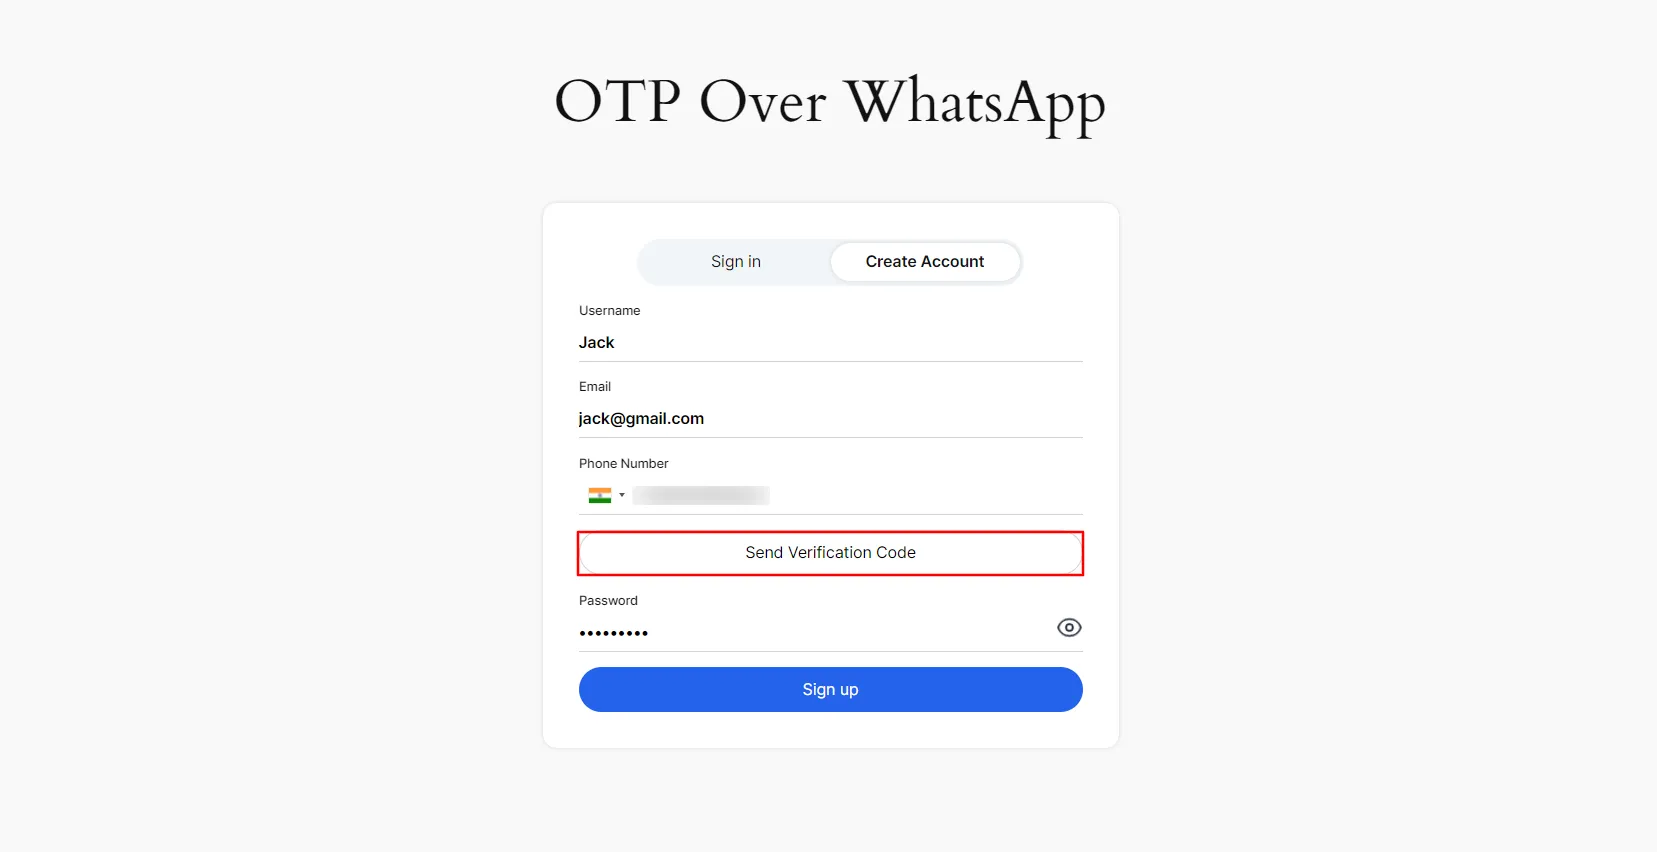 WhatsApp Login with OTP - click send verification code